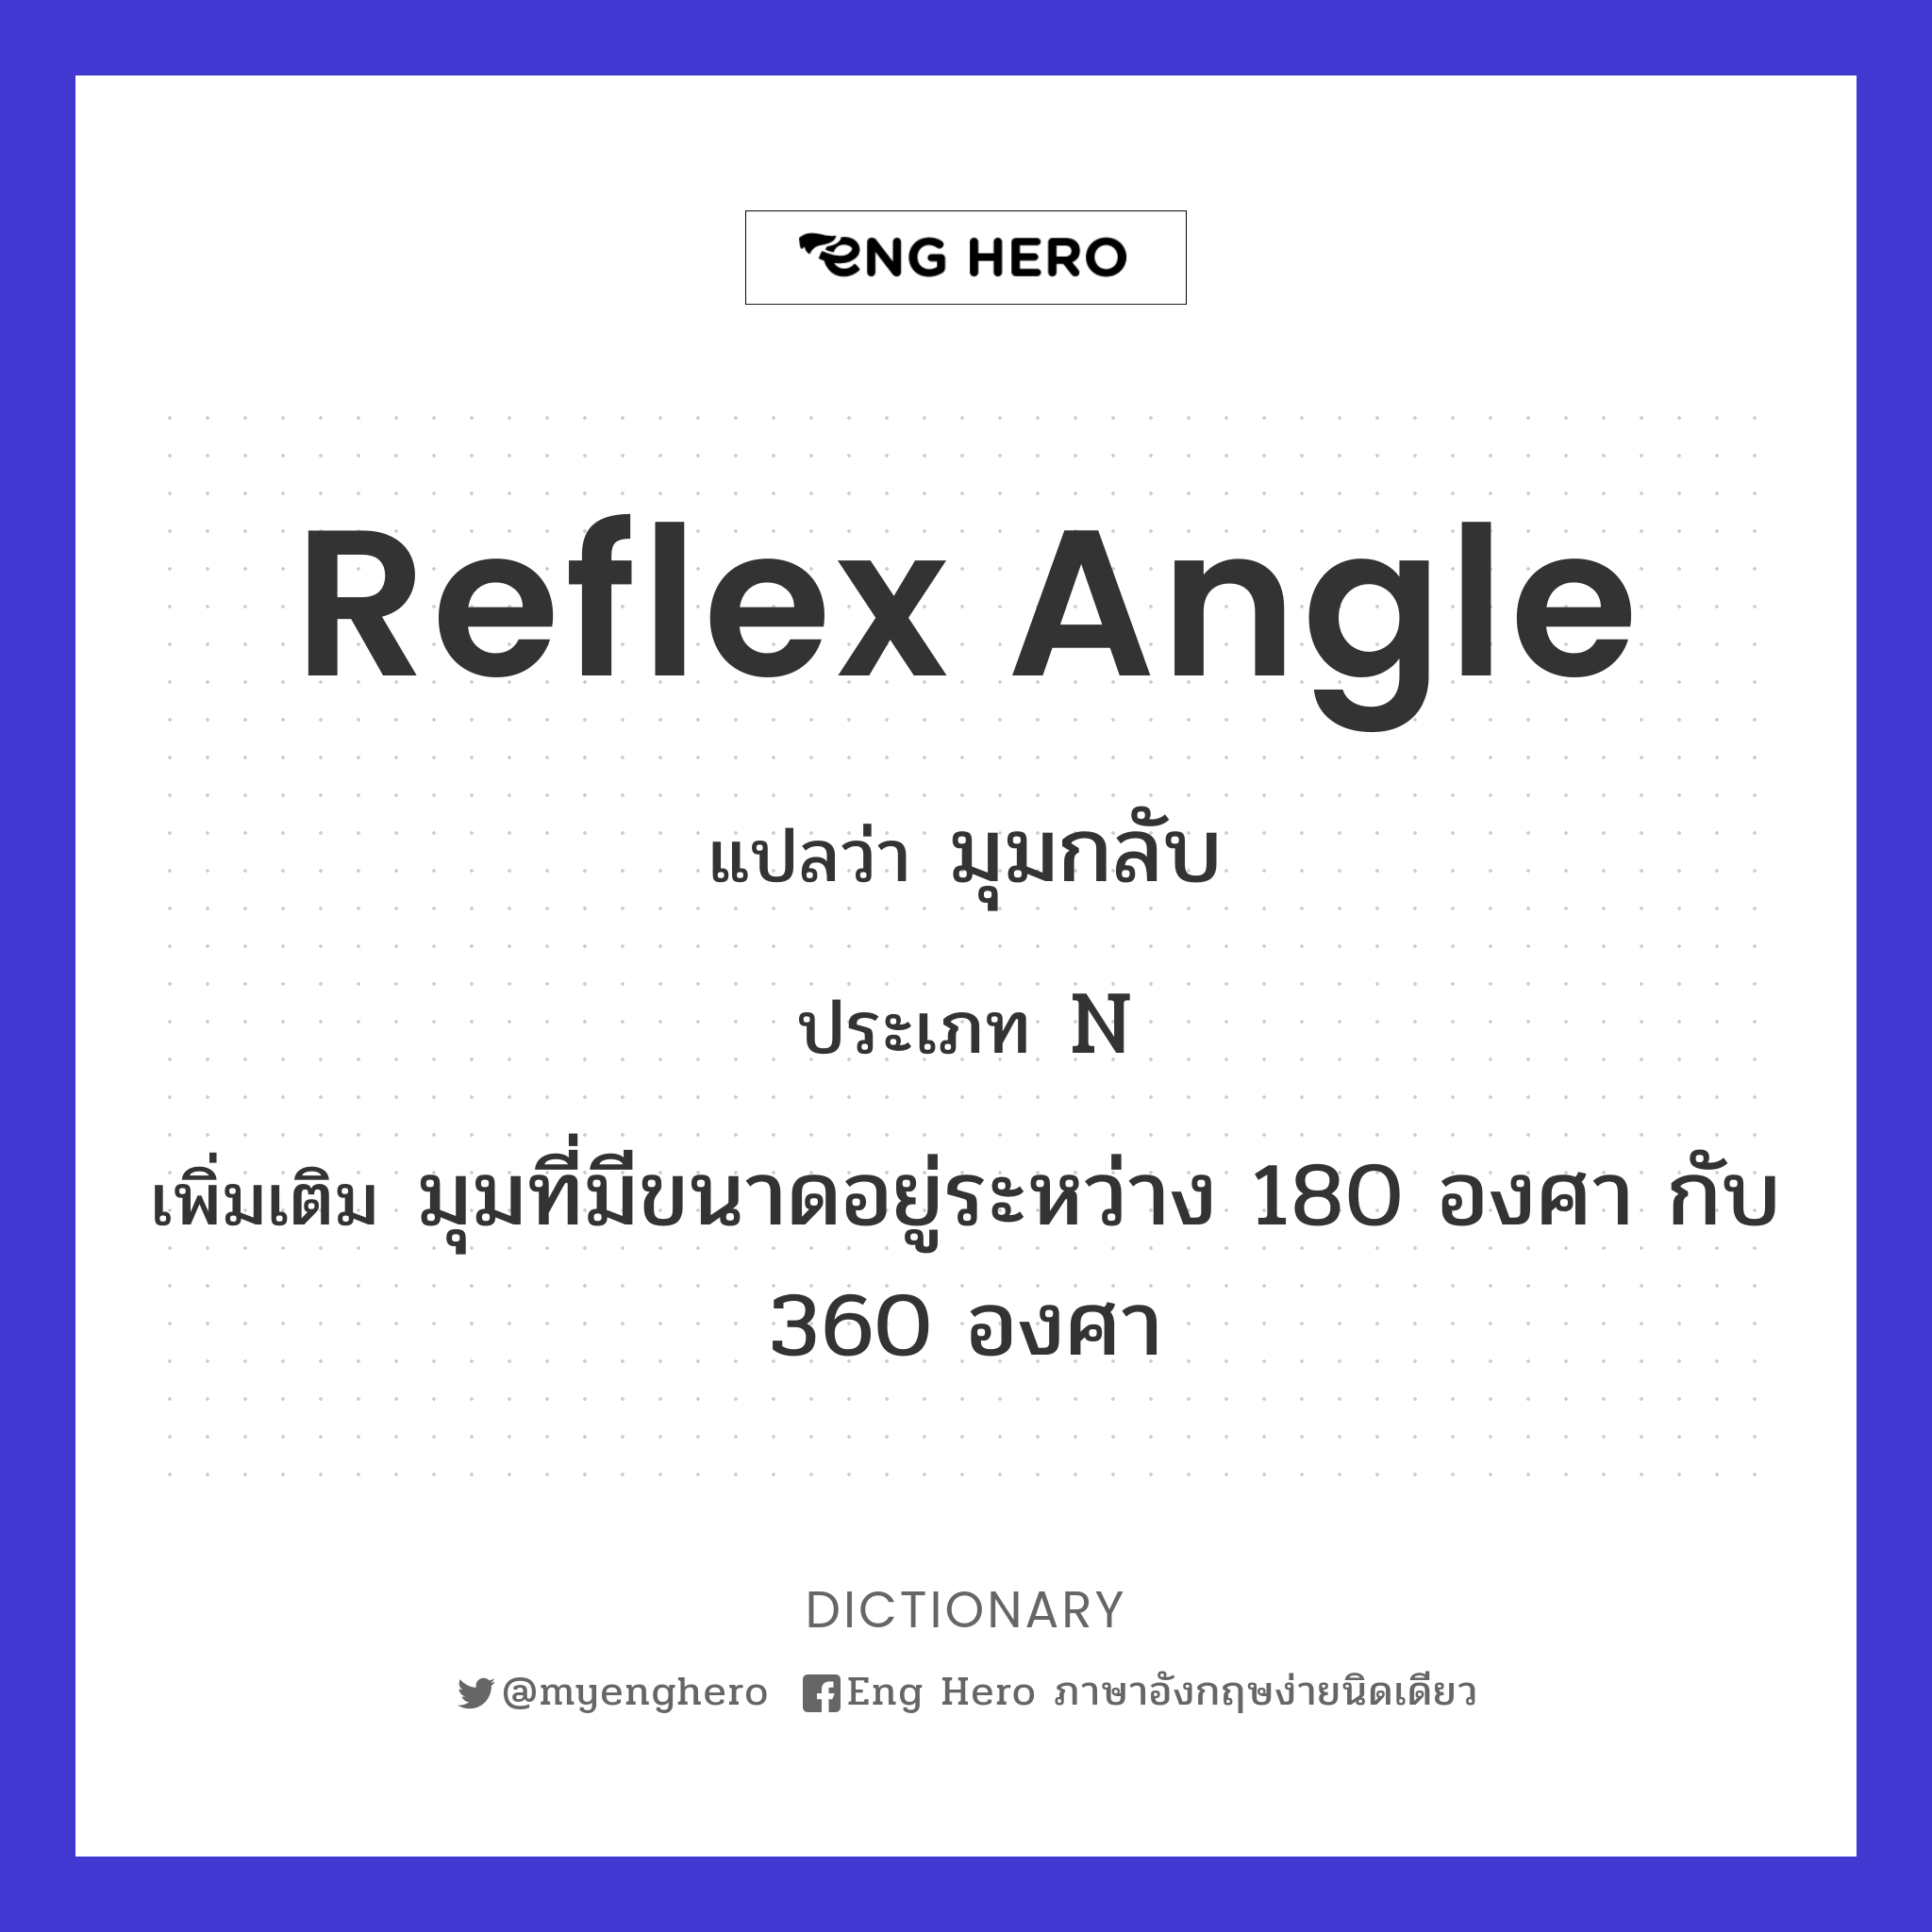 reflex angle